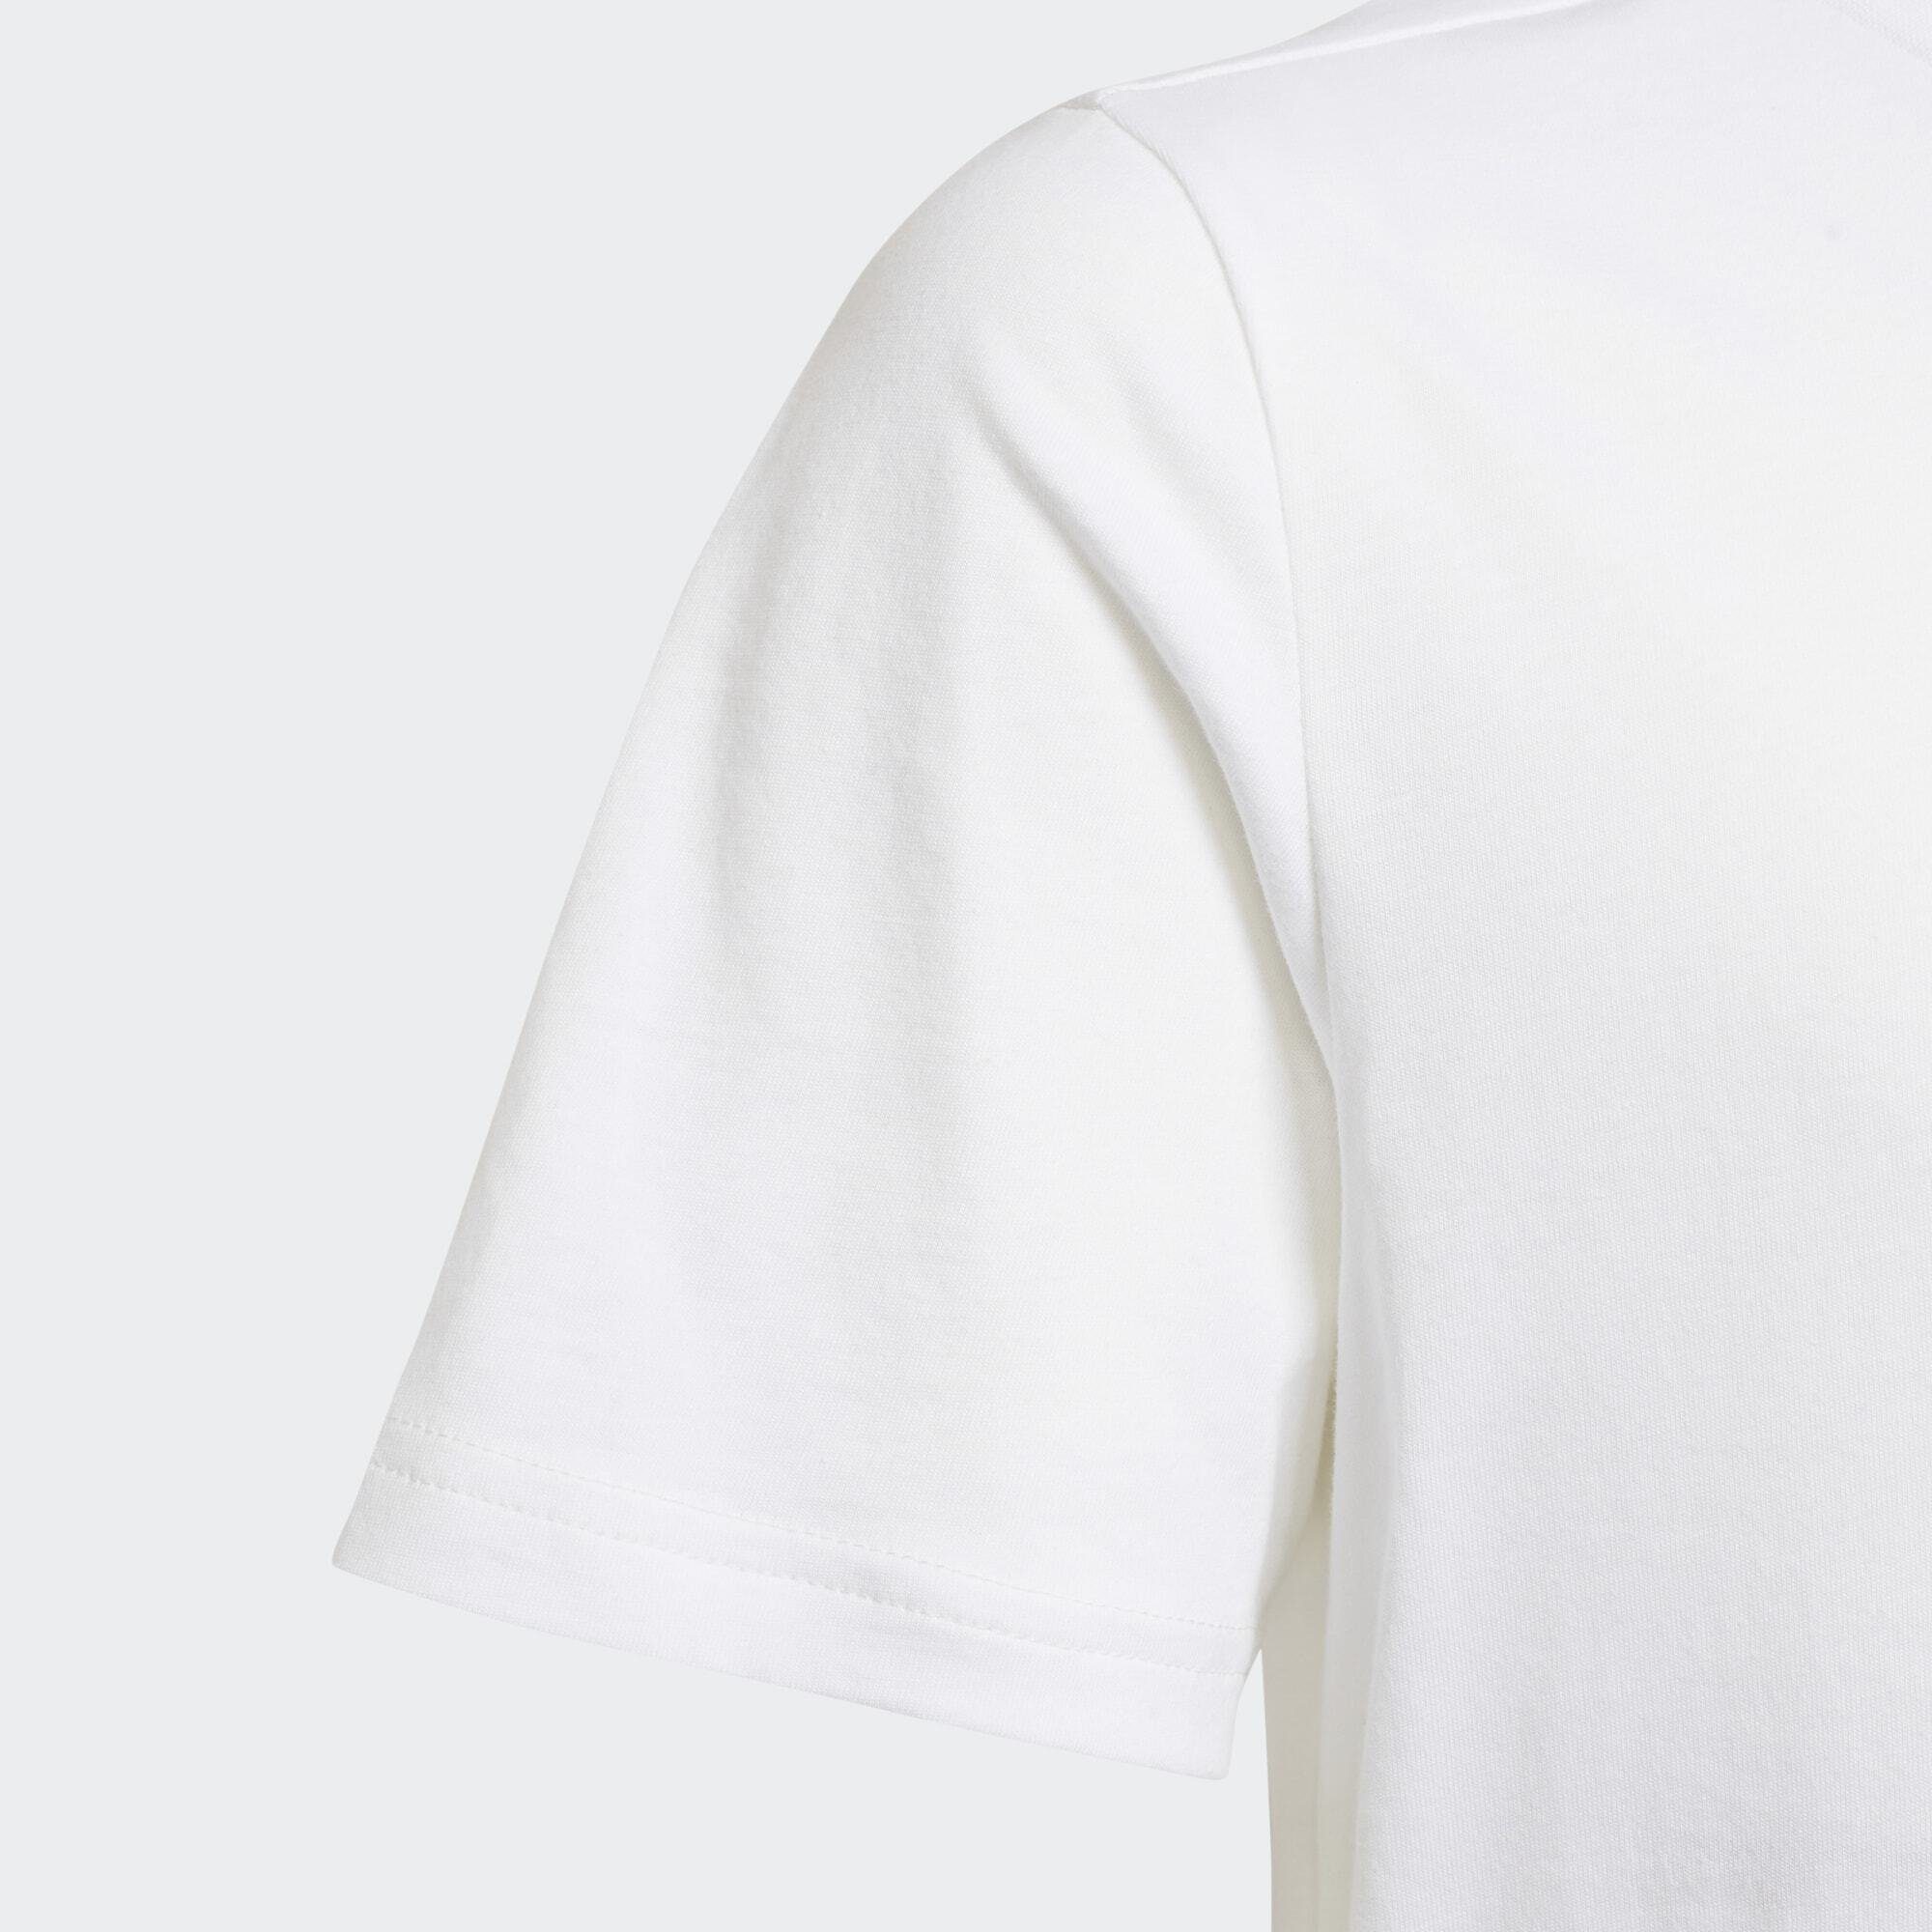 T-SHIRT adidas T-Shirt ADICOLOR Originals White